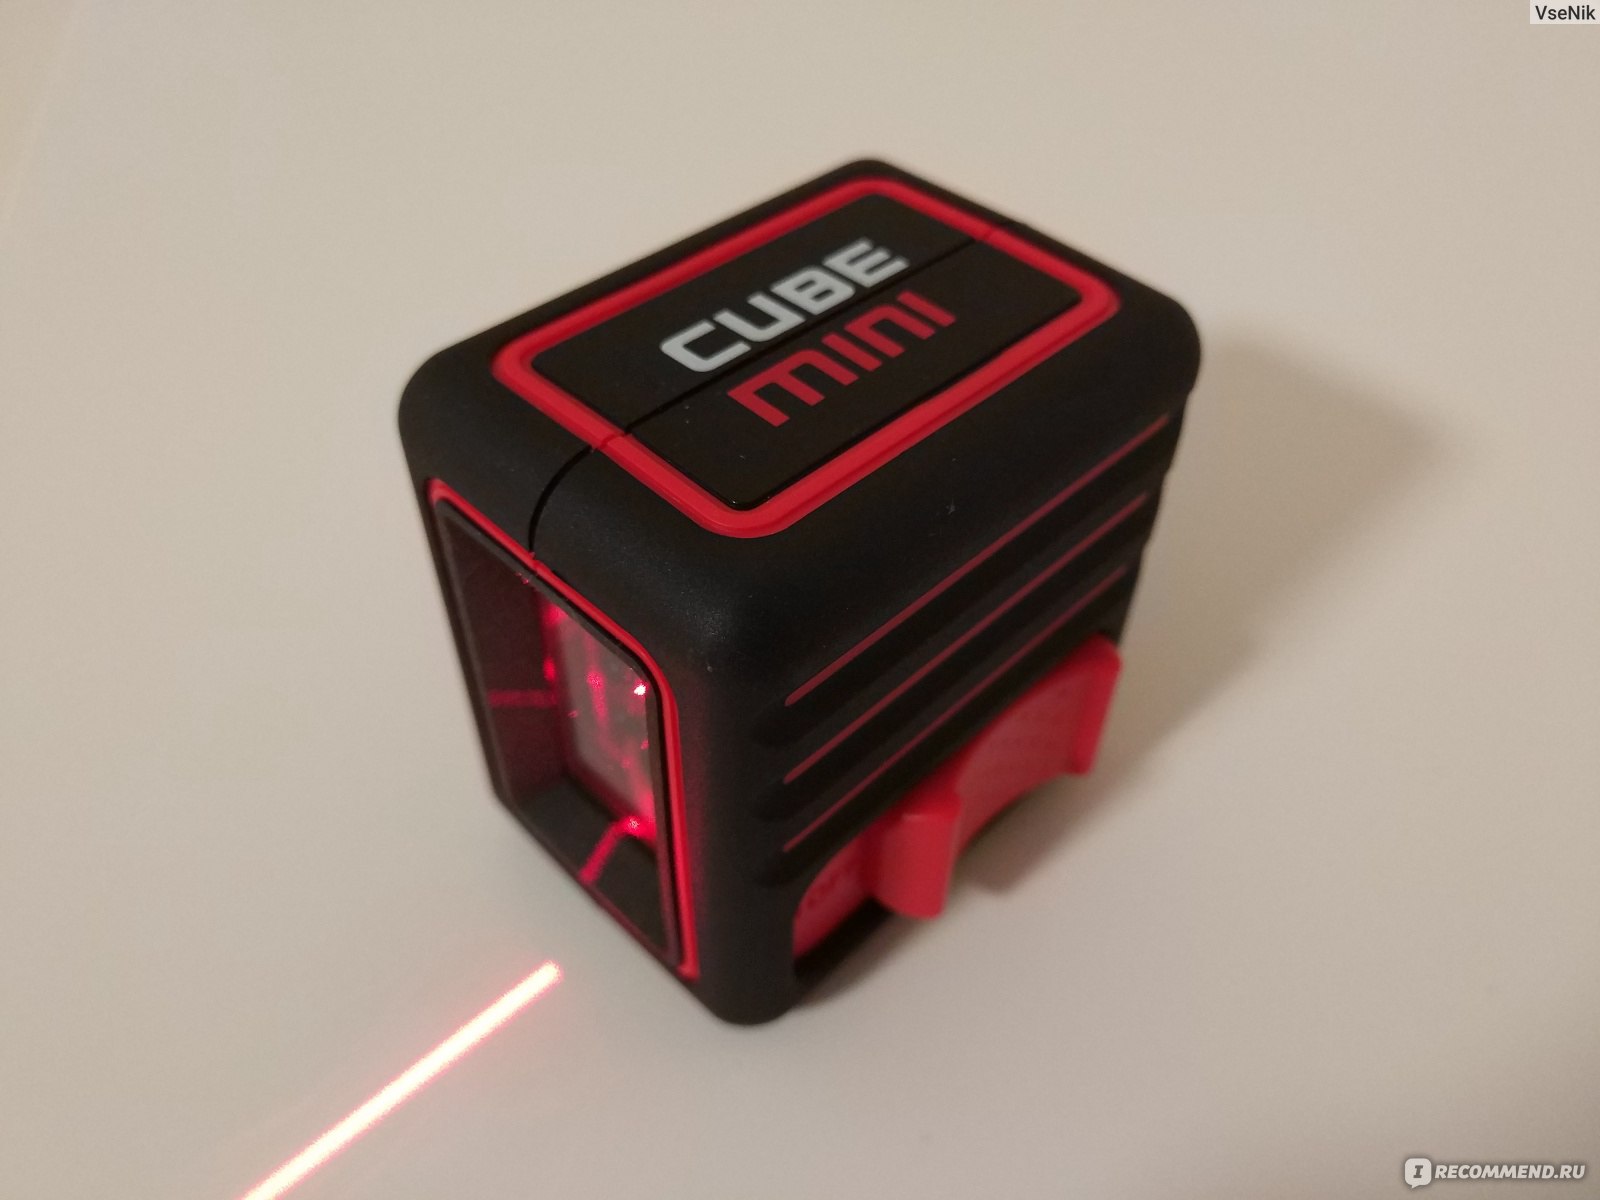 Cube mini basic edition